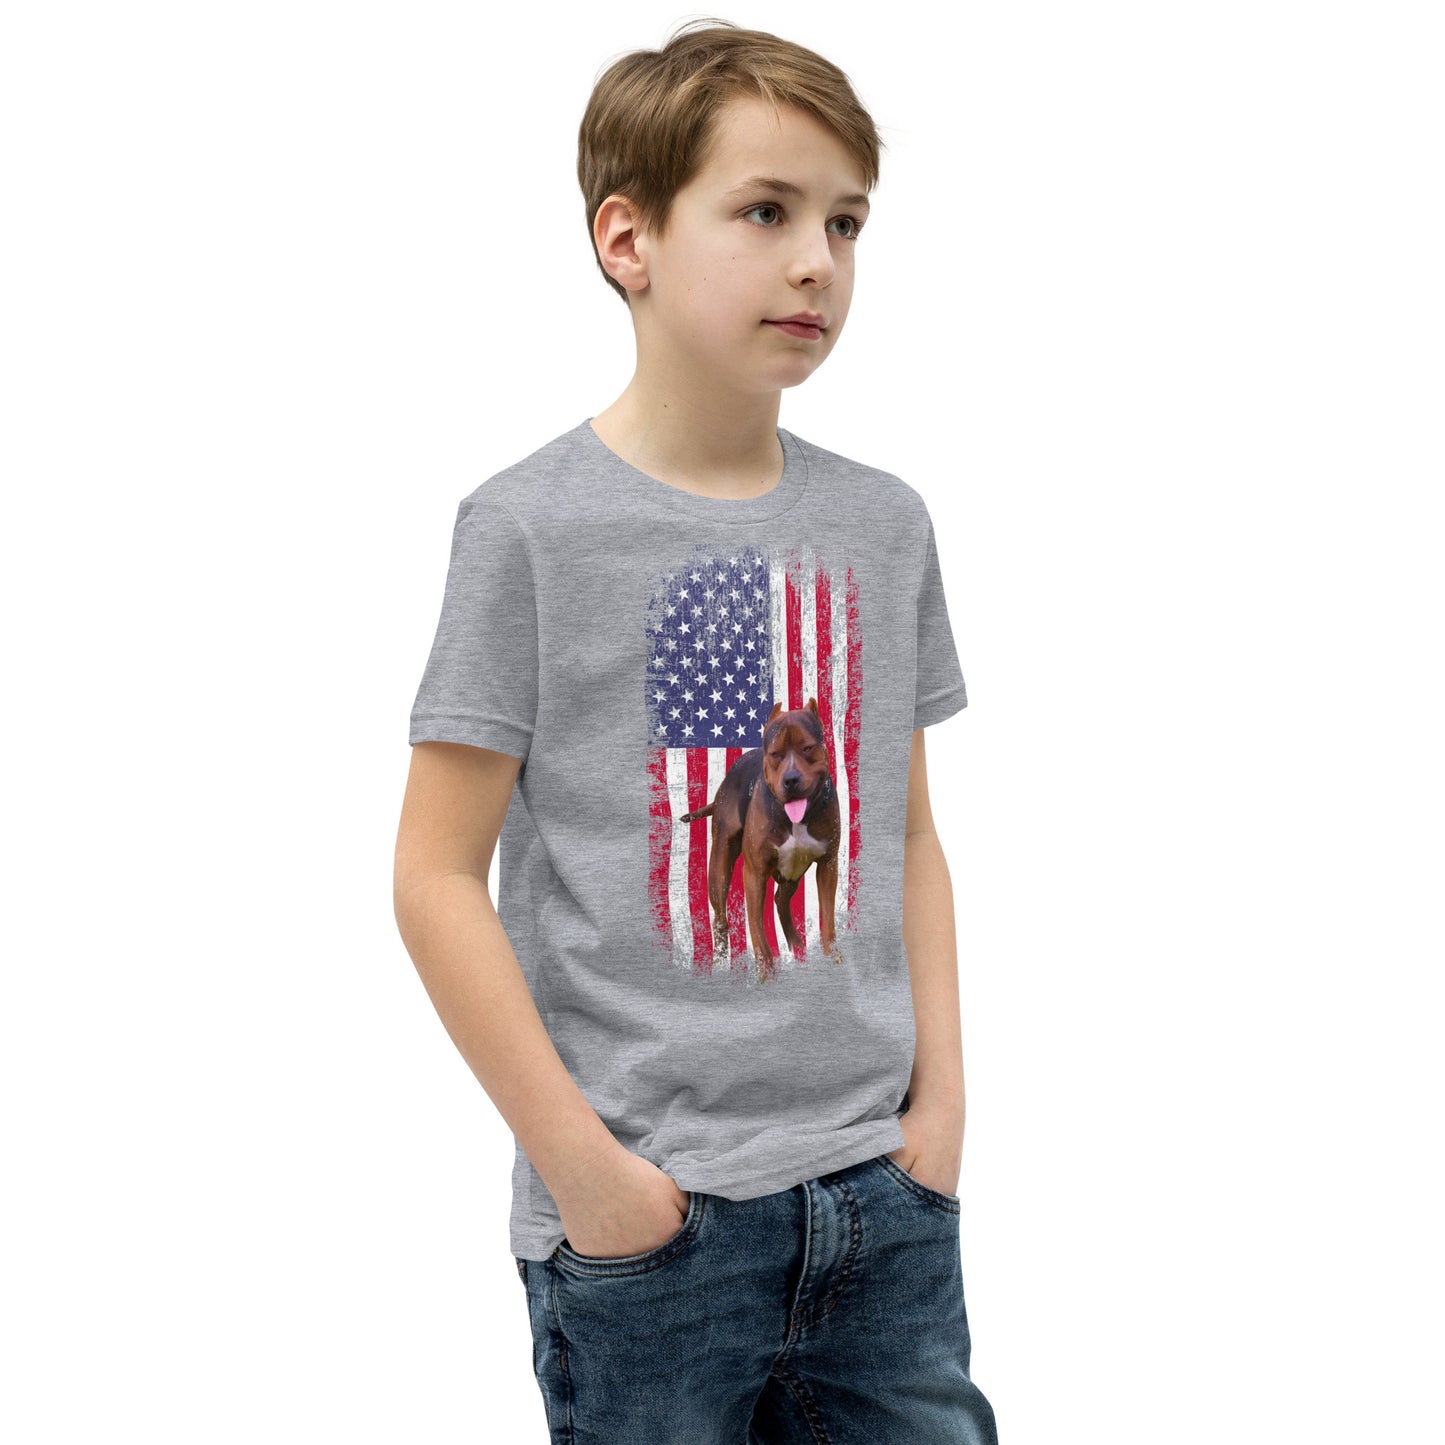 Sossa USA Youth T-Shirt